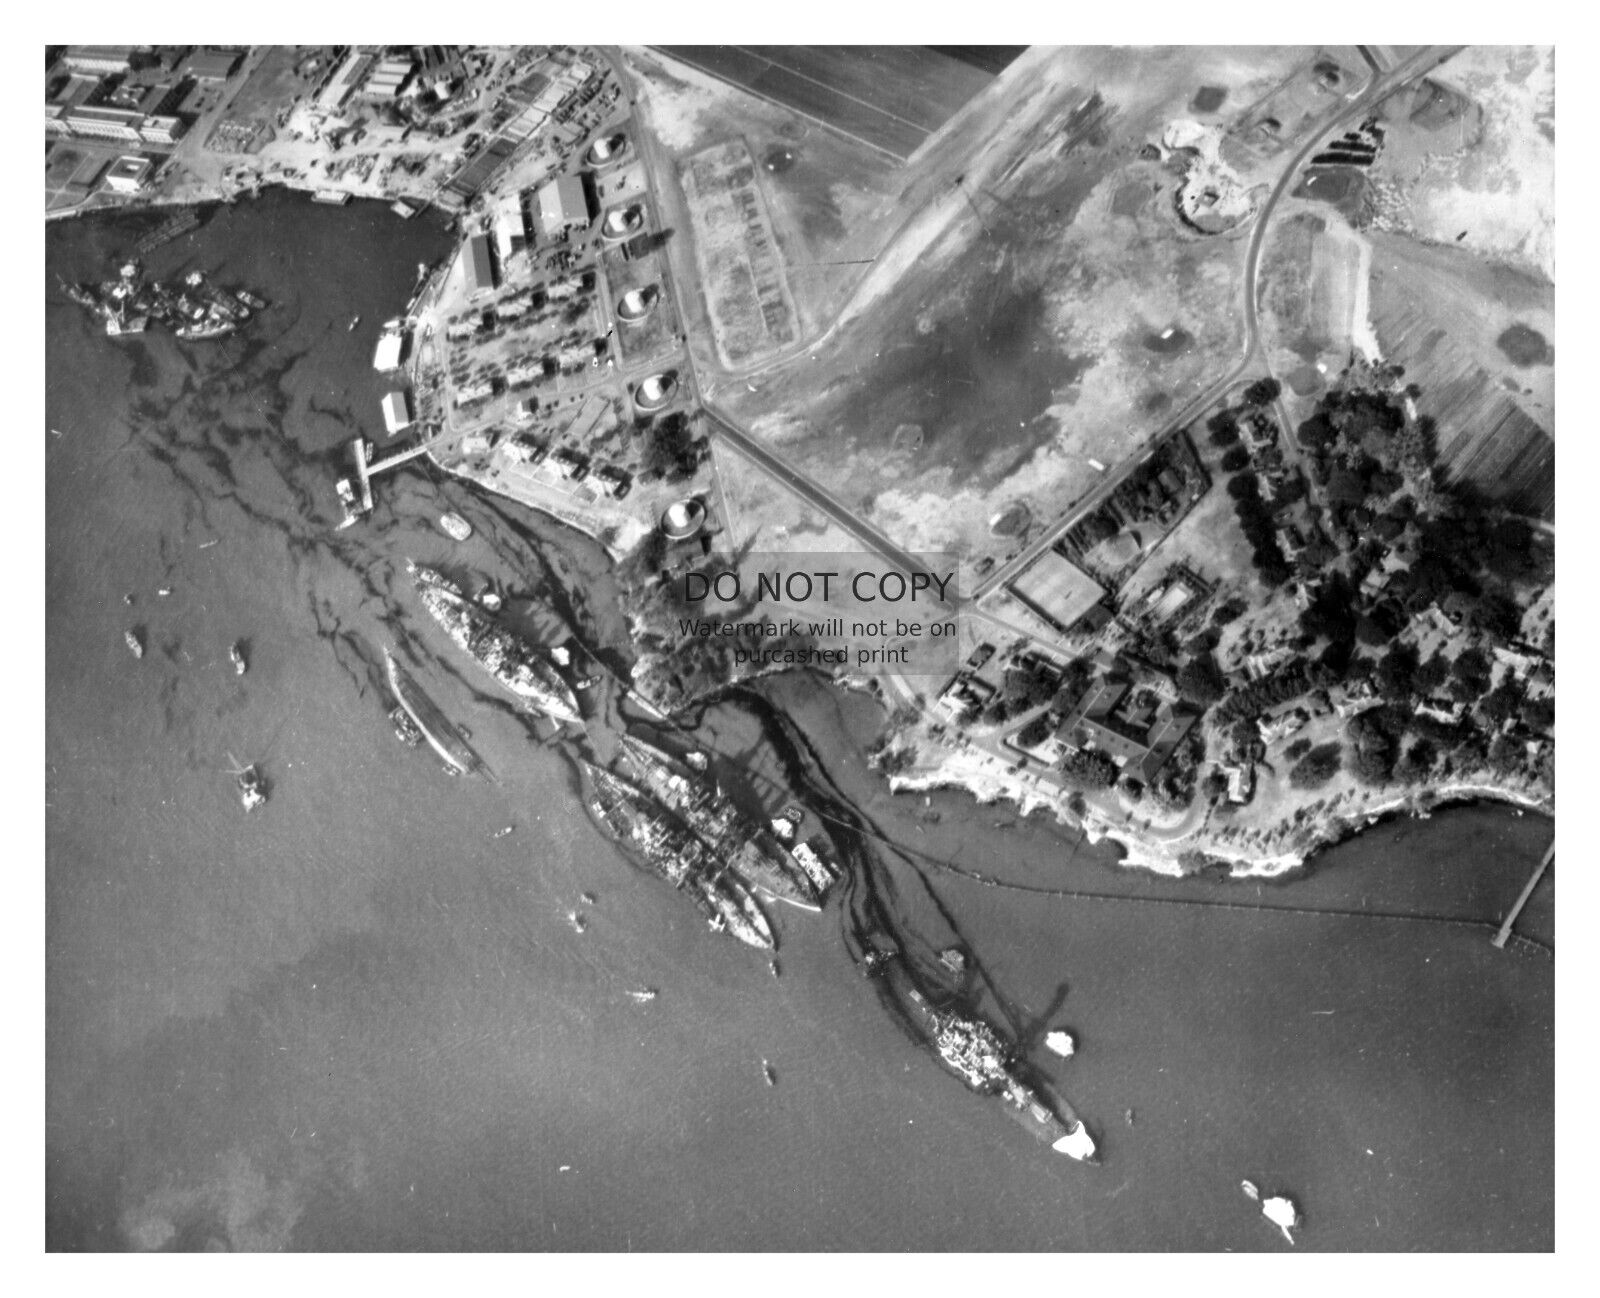 PEARL HARBOR AFTERMATH BATTLESHIP ROW USS ARIZONA DESTROYED WW2 8X10 PHOTO